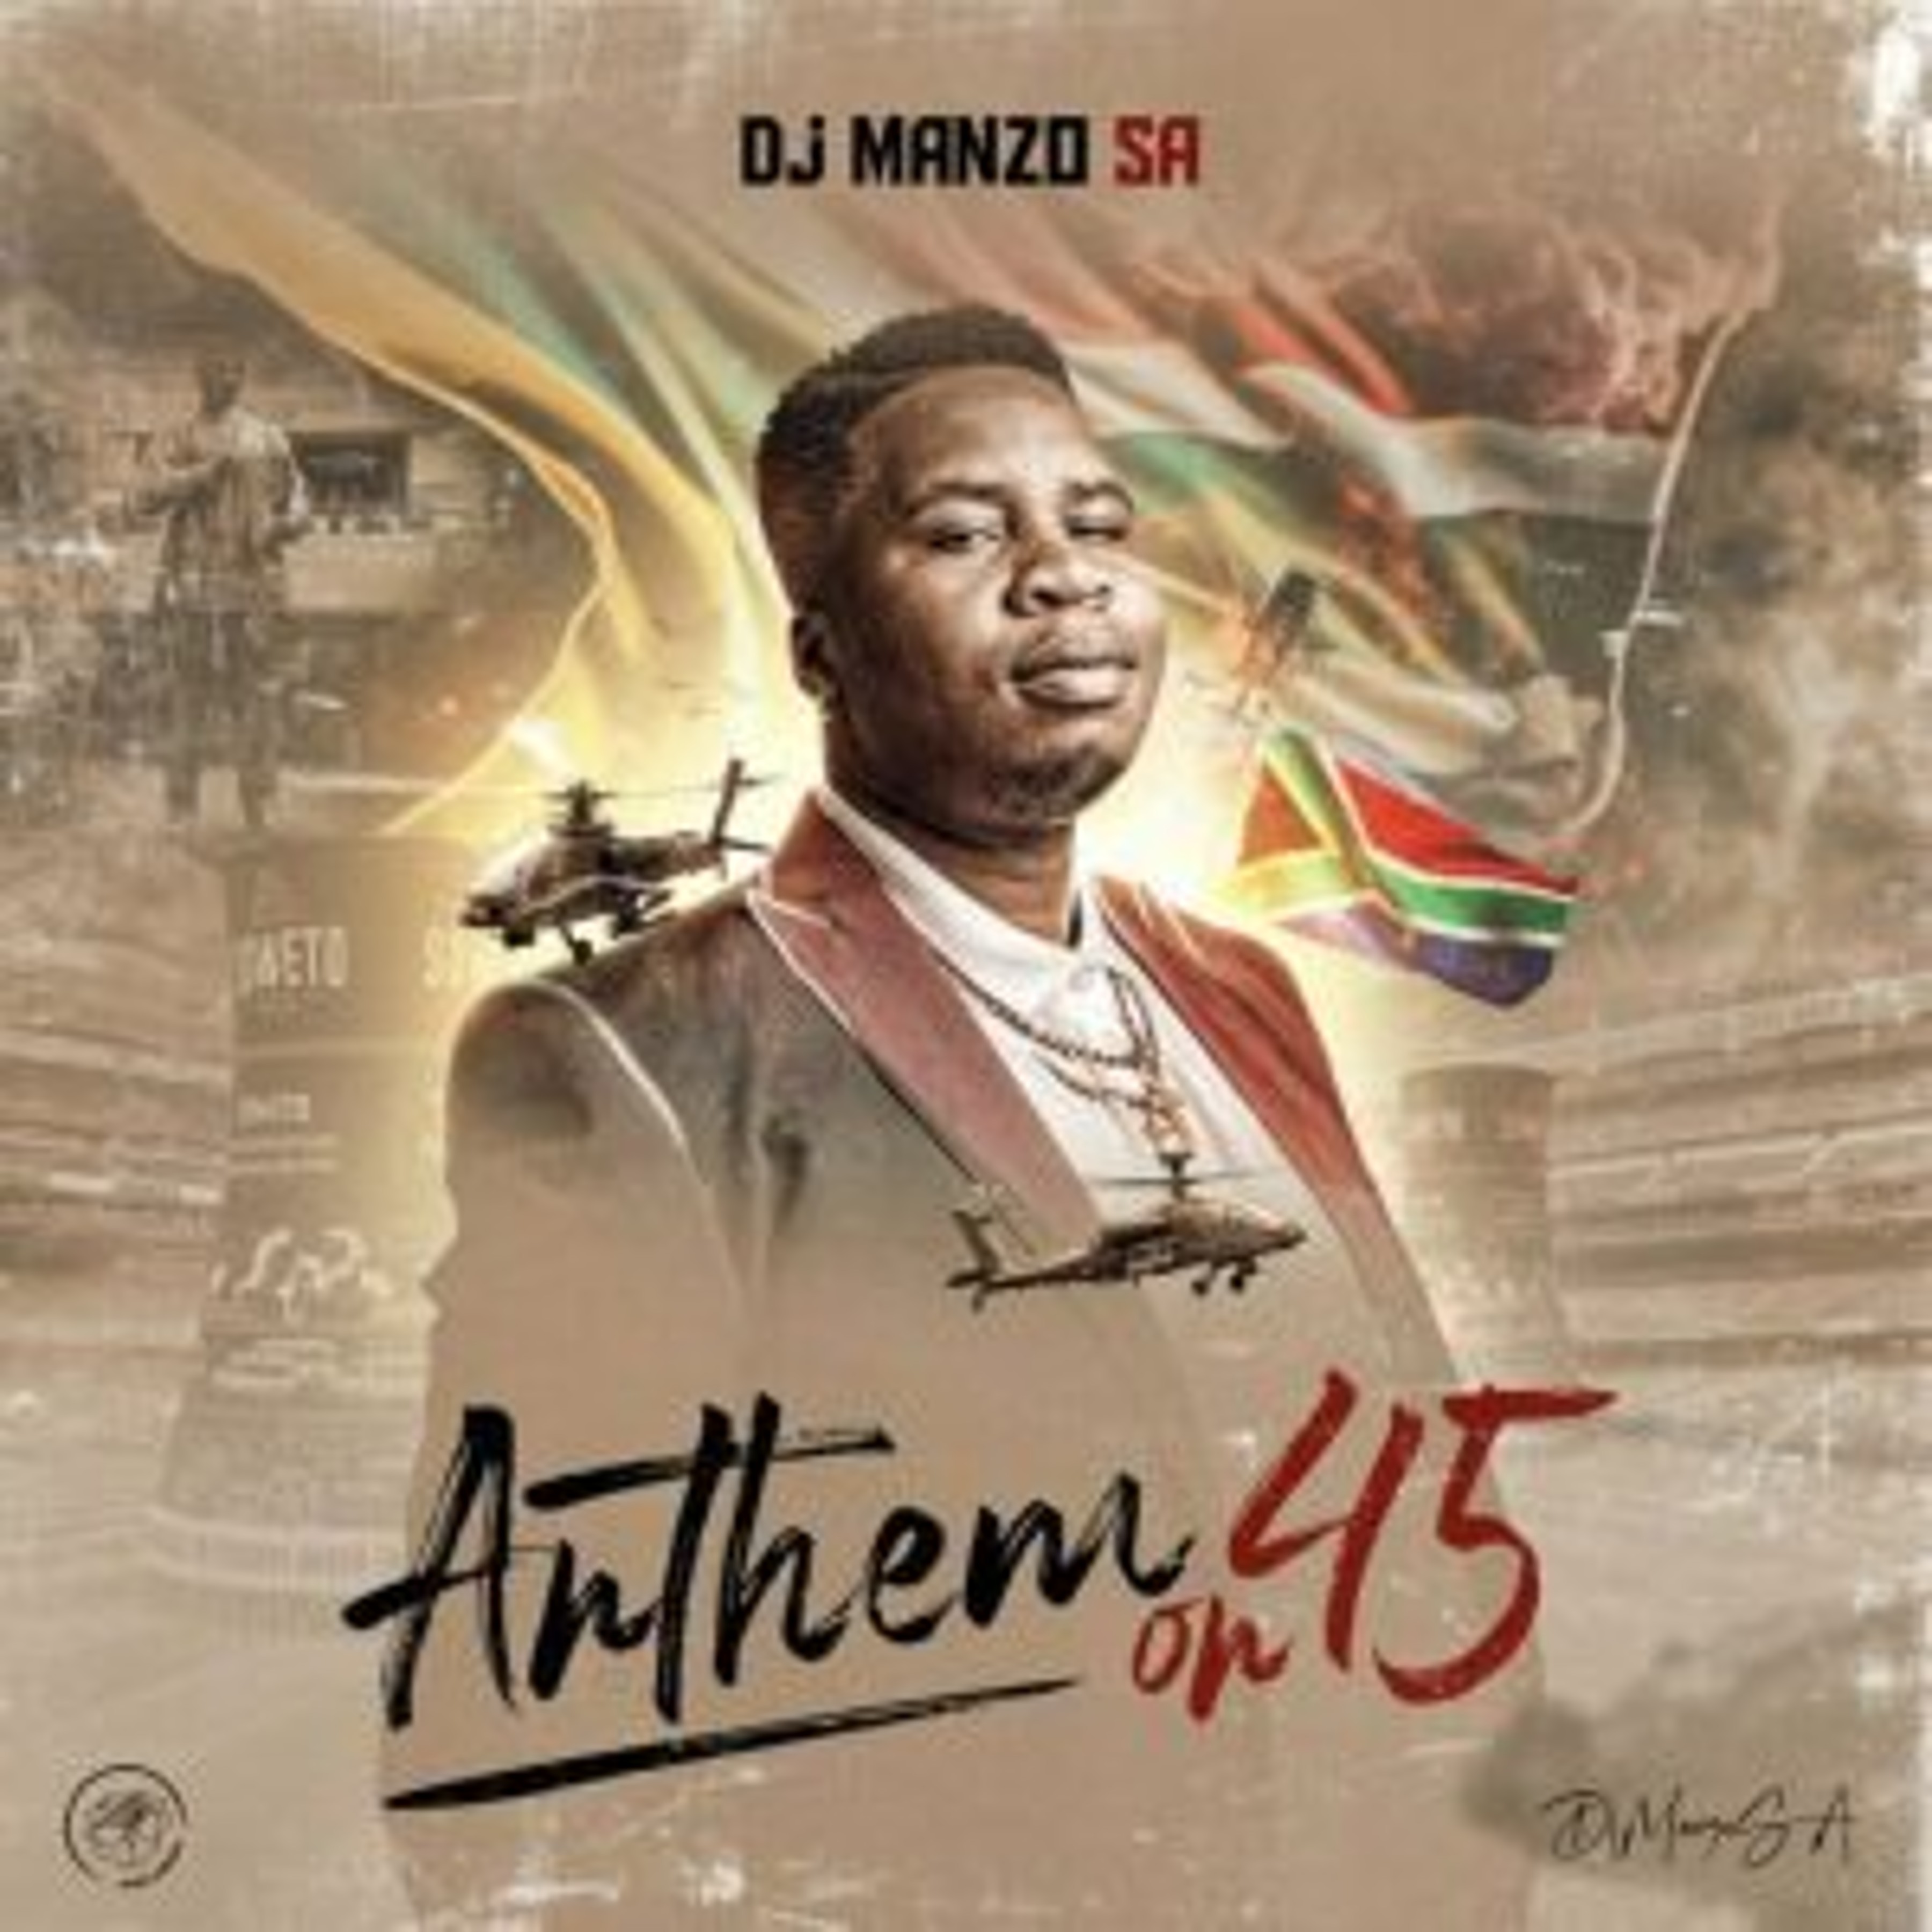 DJ Manzo SA – Anthem On 45  Mp3 Download Fakaza: